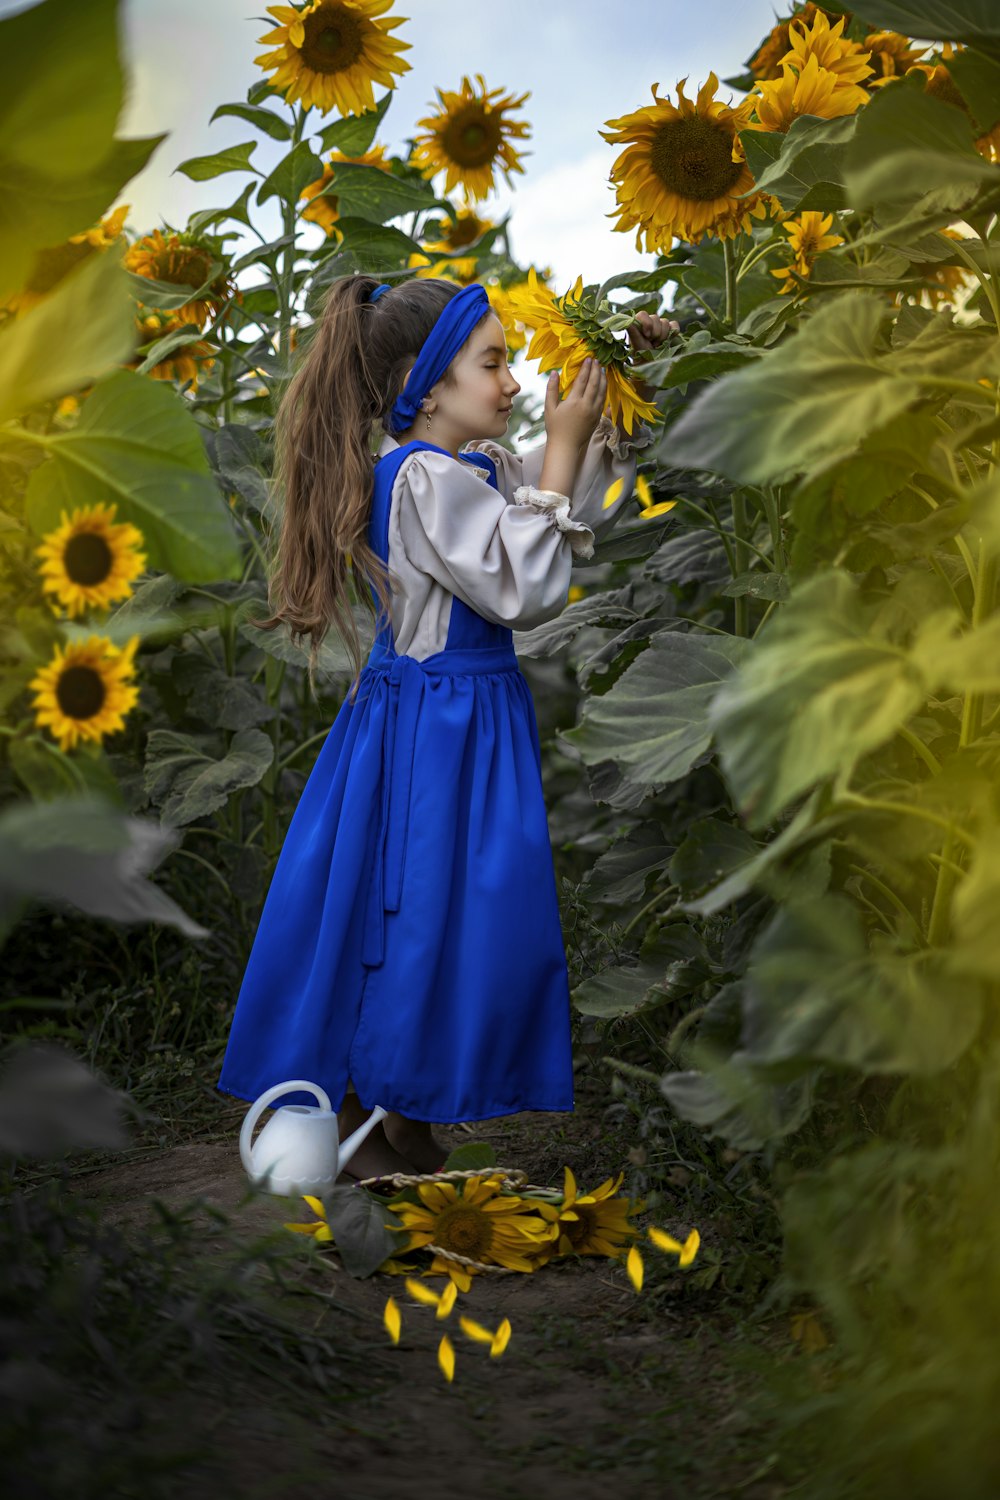 a little girl in a blue dress standing in a field of sunflowers